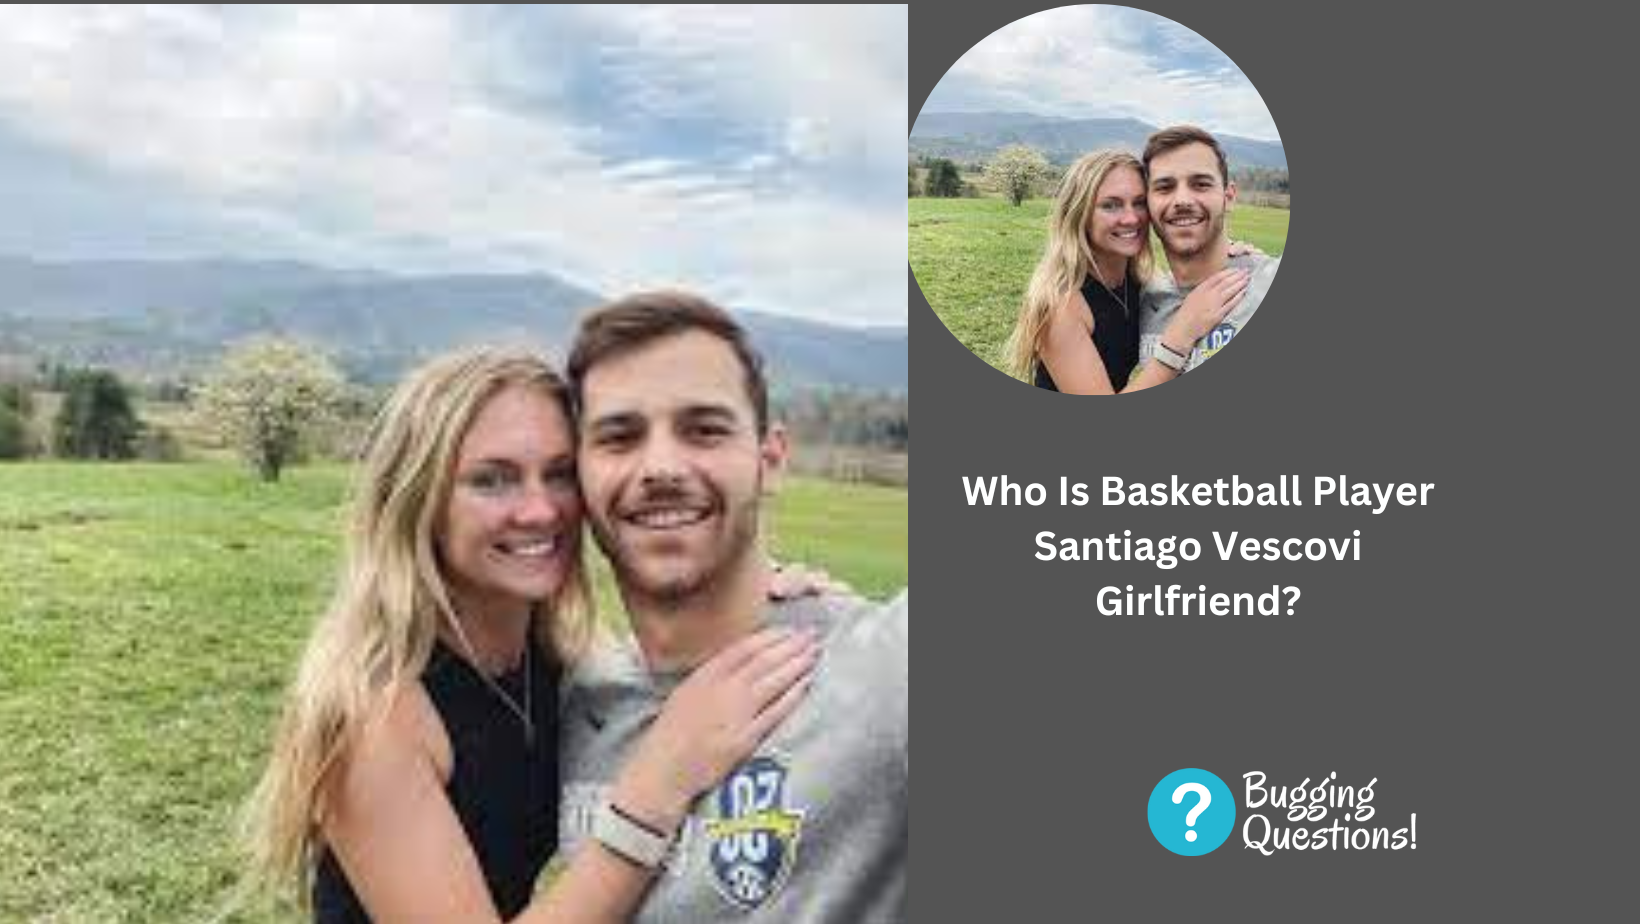 Who Is Basketball Player Santiago Vescovi Girlfriend?